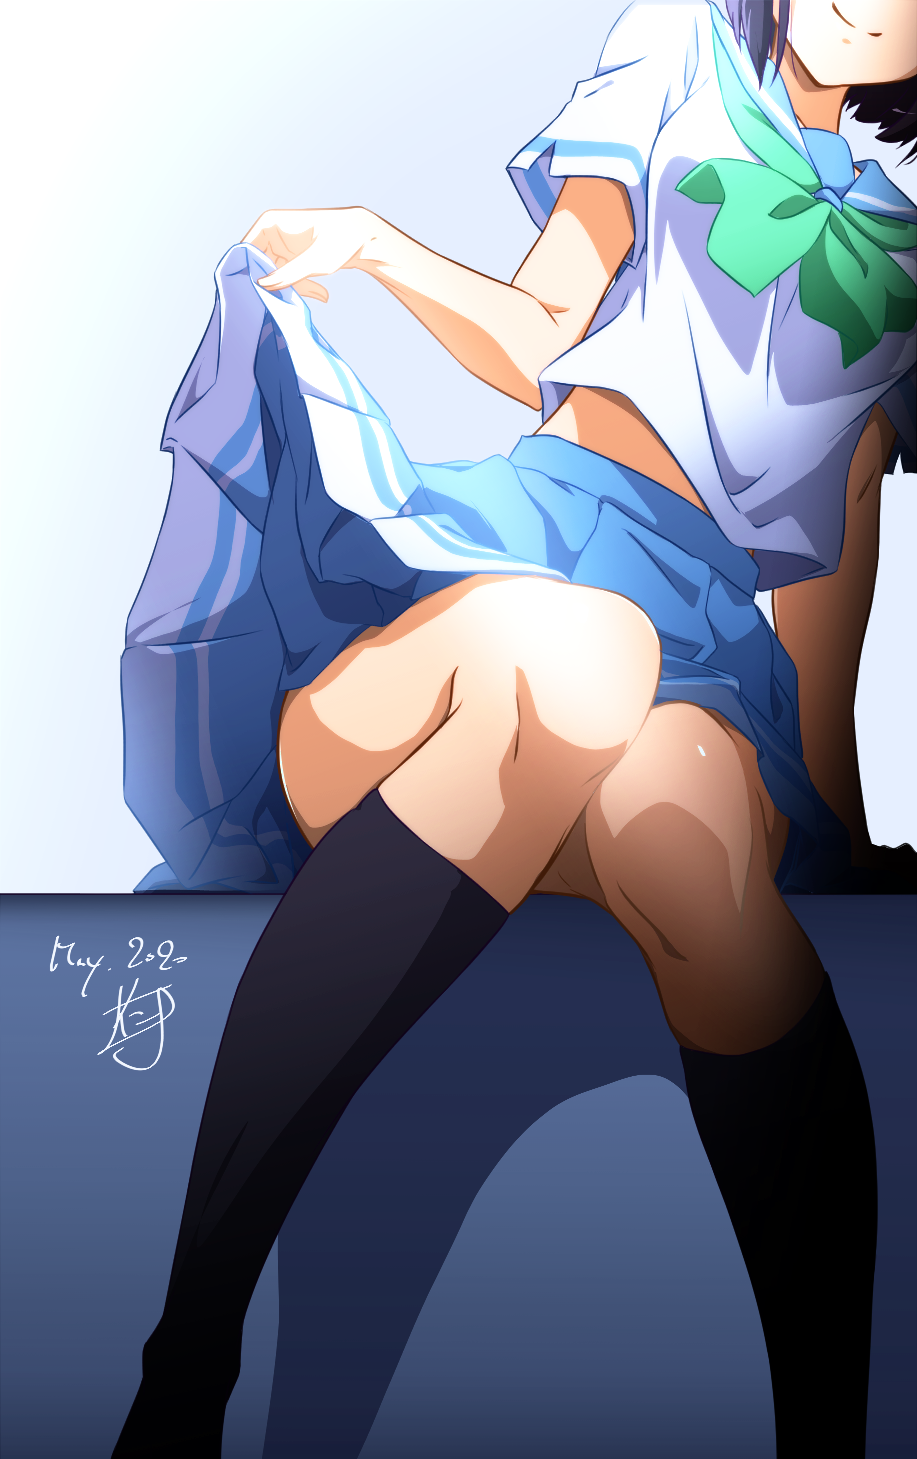 Anime 917x1459 anime anime girls digital art artwork 2D portrait display lifting skirt school uniform Hibike! Euphonium Nii Manabu smiling